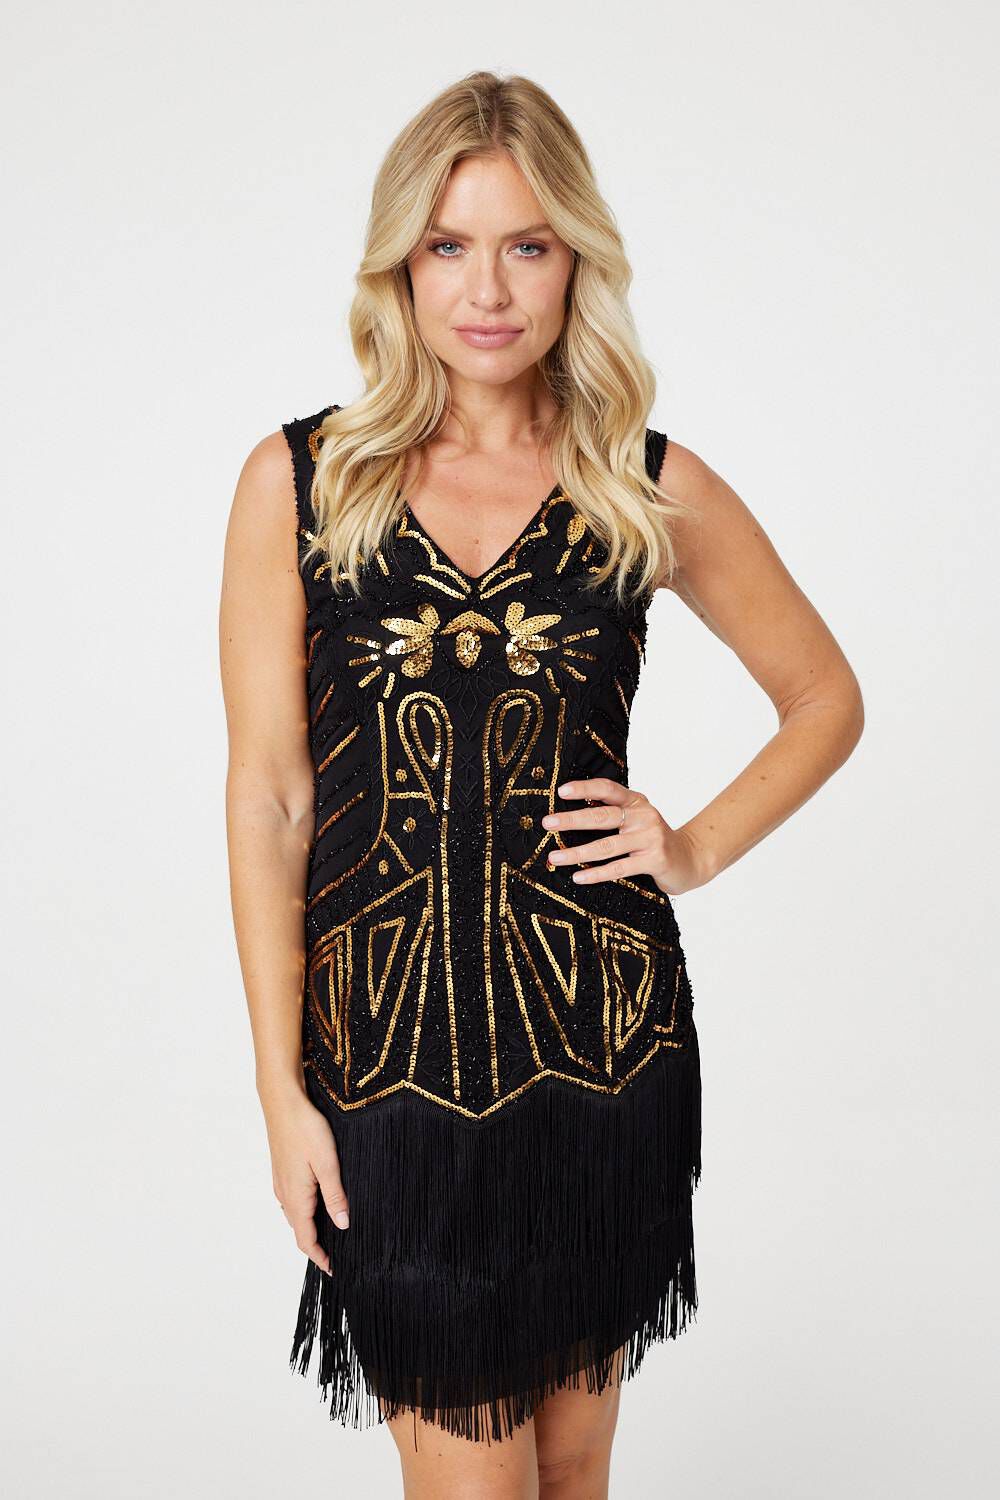 Izabel London Women’s Black and Gold Sequin Sleeveless Short Dress, Size: 10